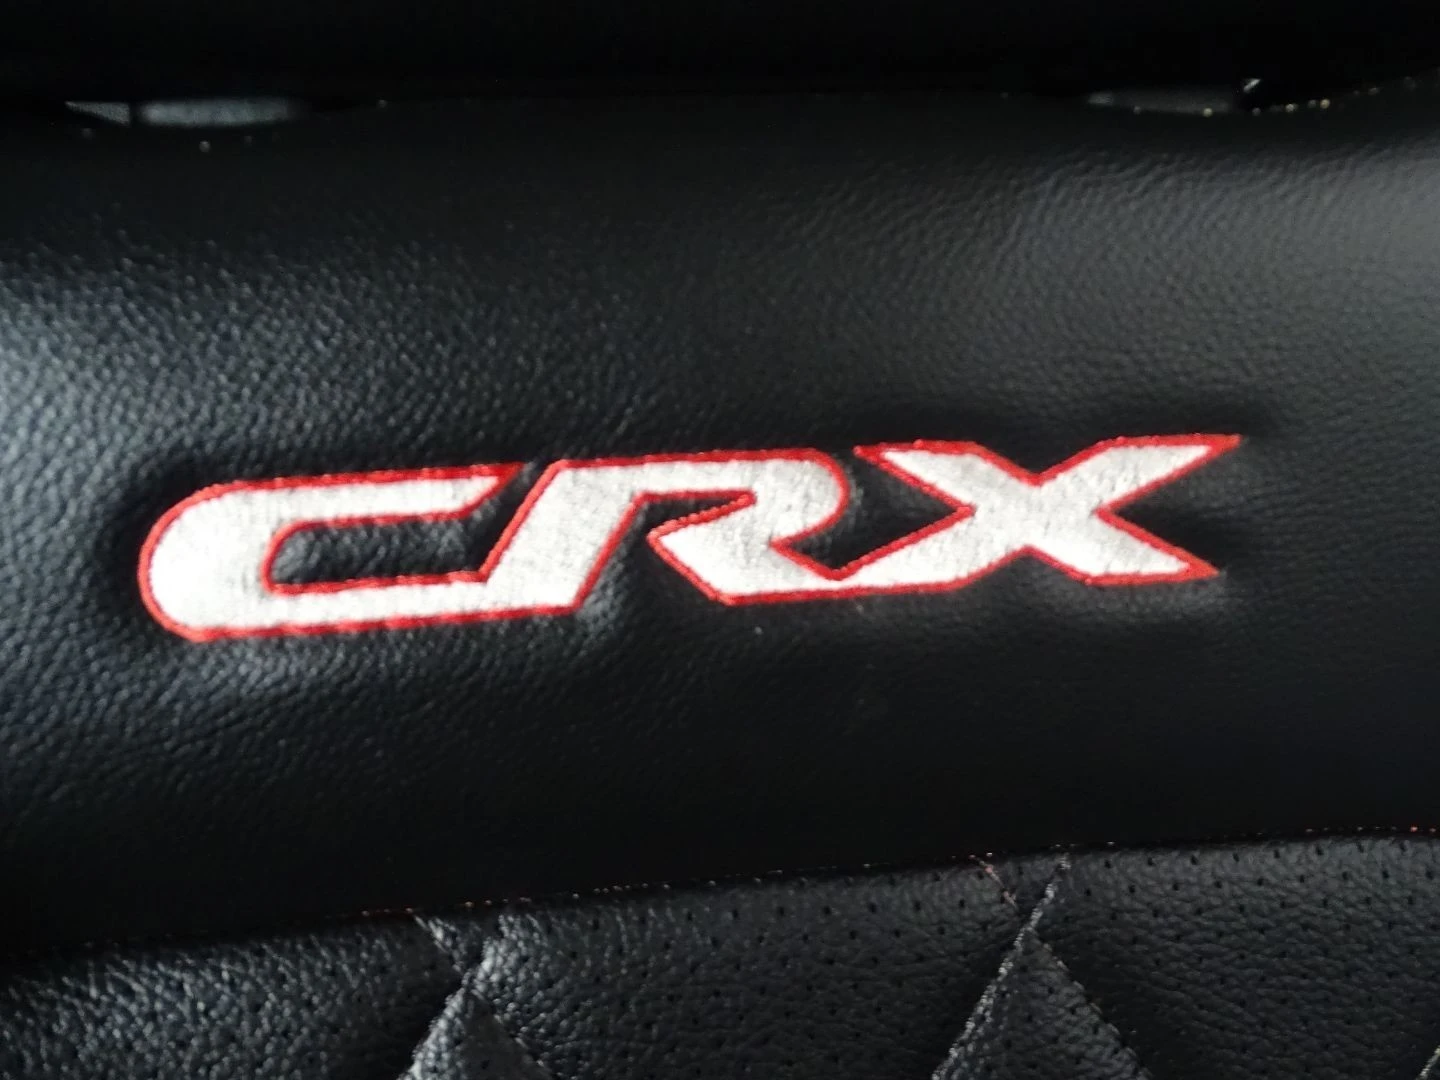 Honda CRX 1.6 i 16V